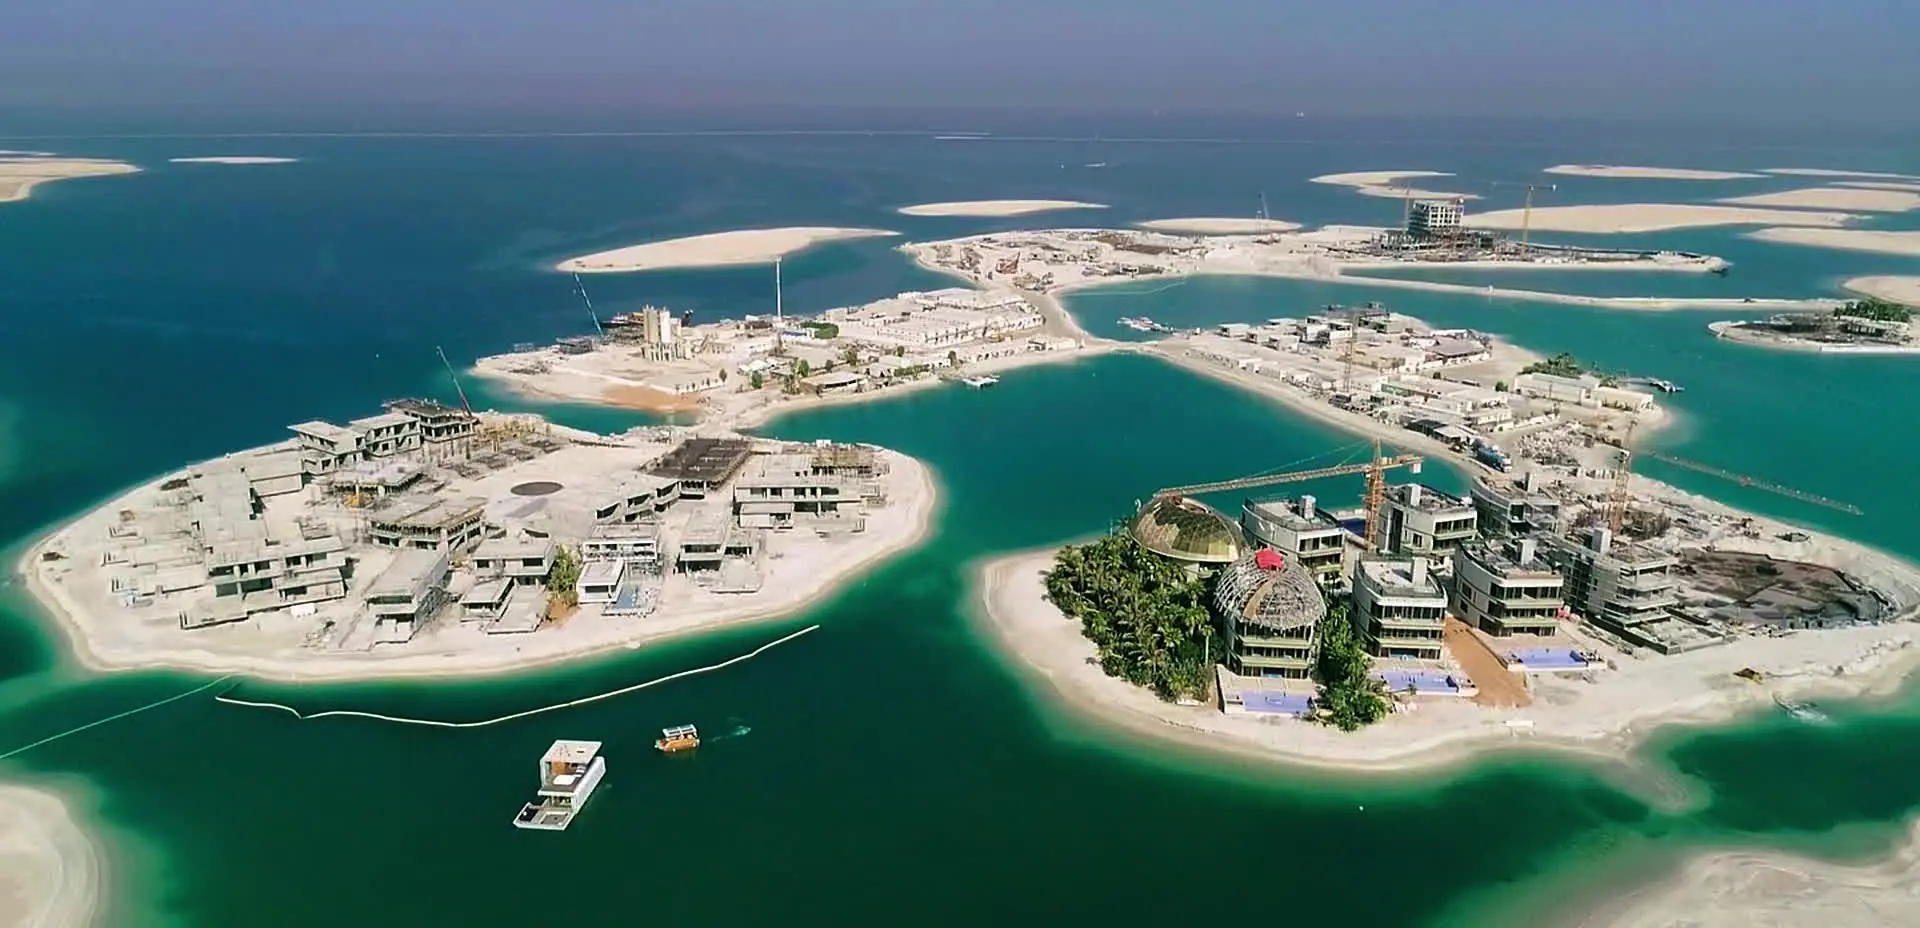 The World Islands Dubai Apartments and Villas for Sale & Rent